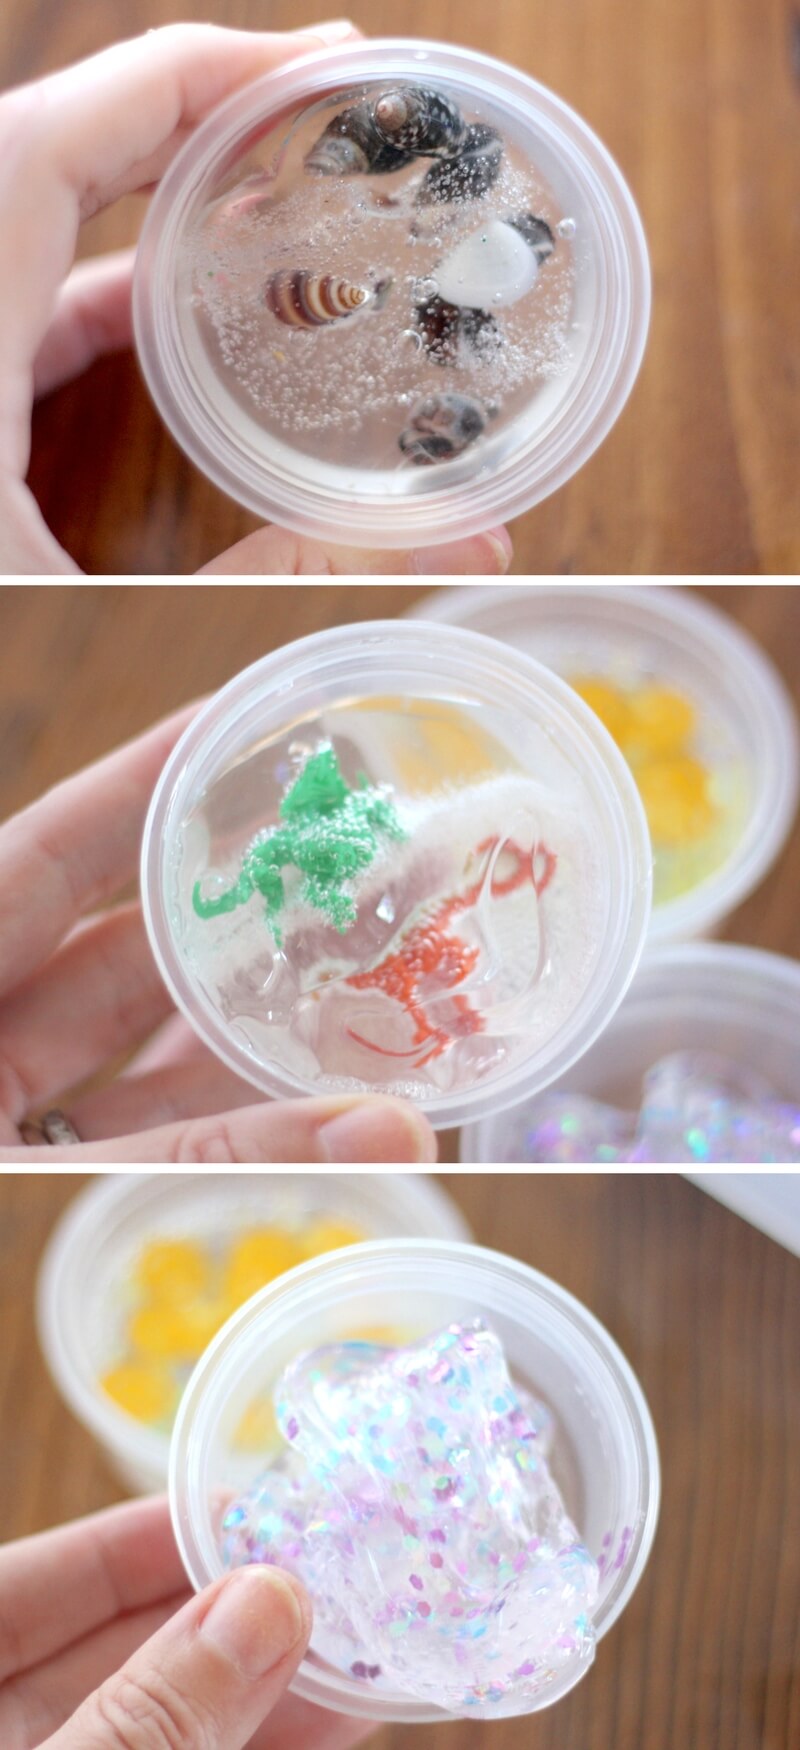 How to make clear slime and add fun mix-ins like mini shells, chunky glitter, and little treasures